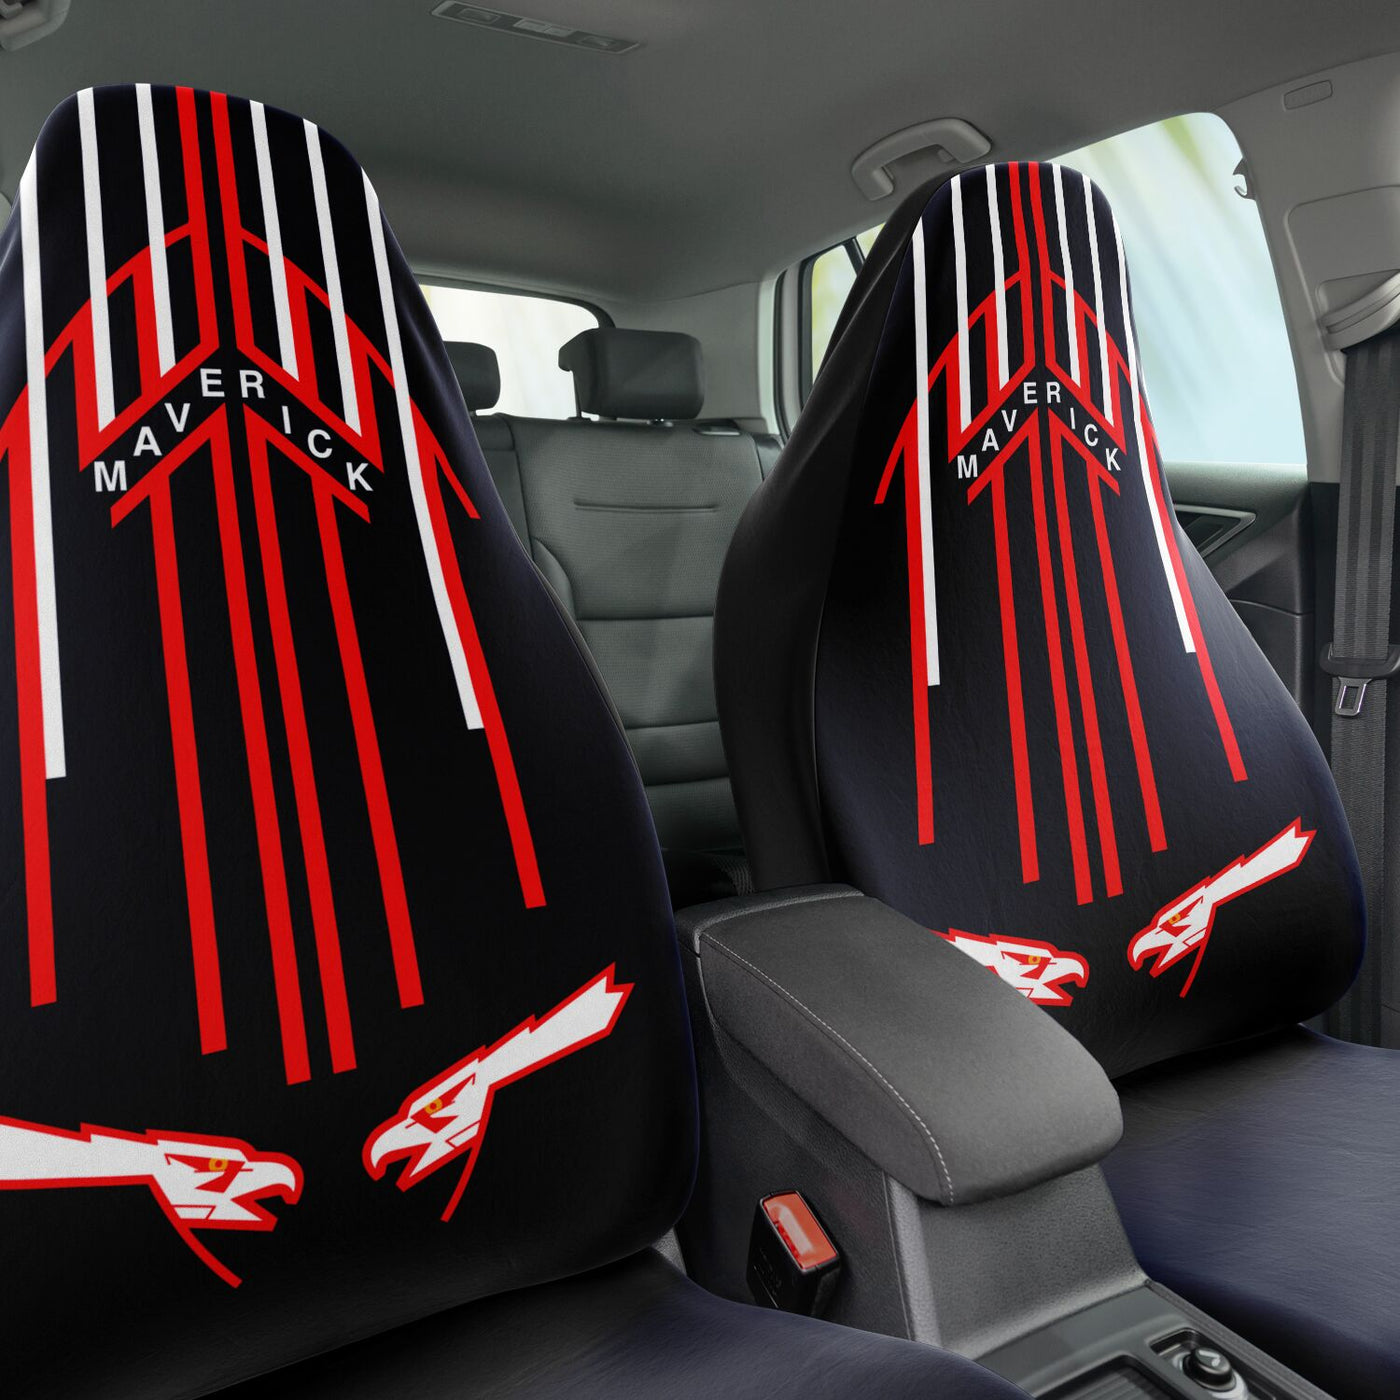 Maverick Car Seat Covers With Top Gun Helmet Graphic